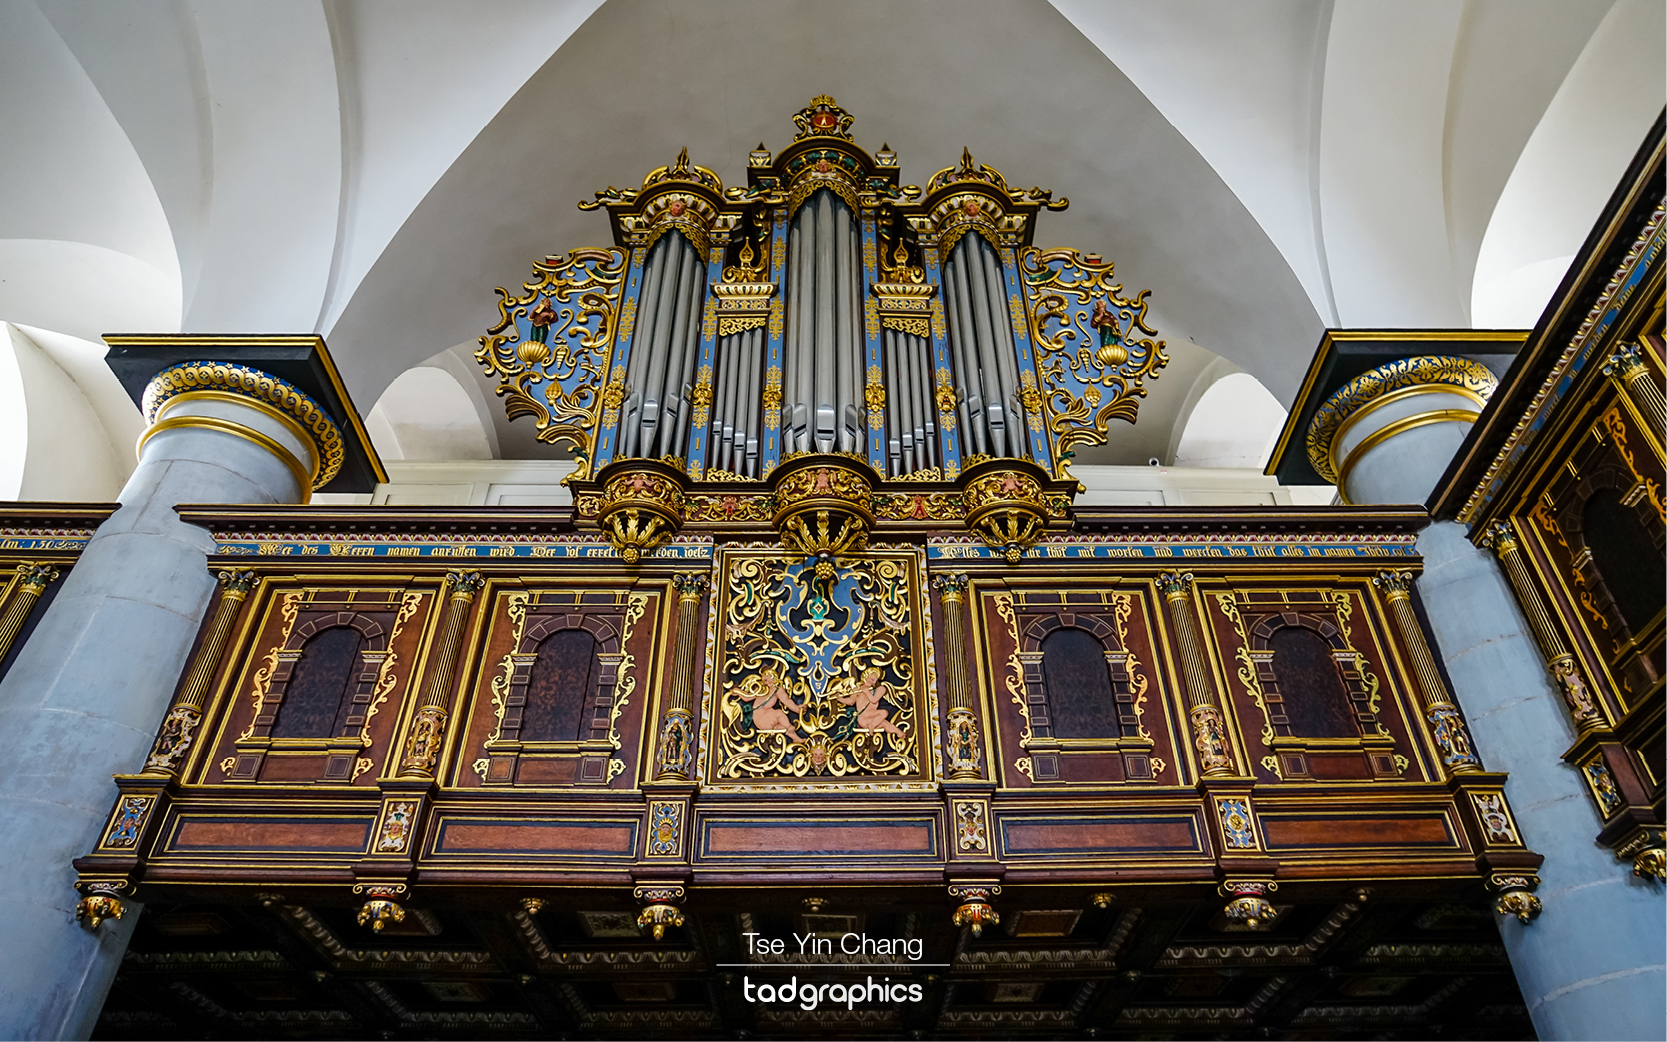 An impressive pipe organ found inside the Chapel in Kronborg Castle